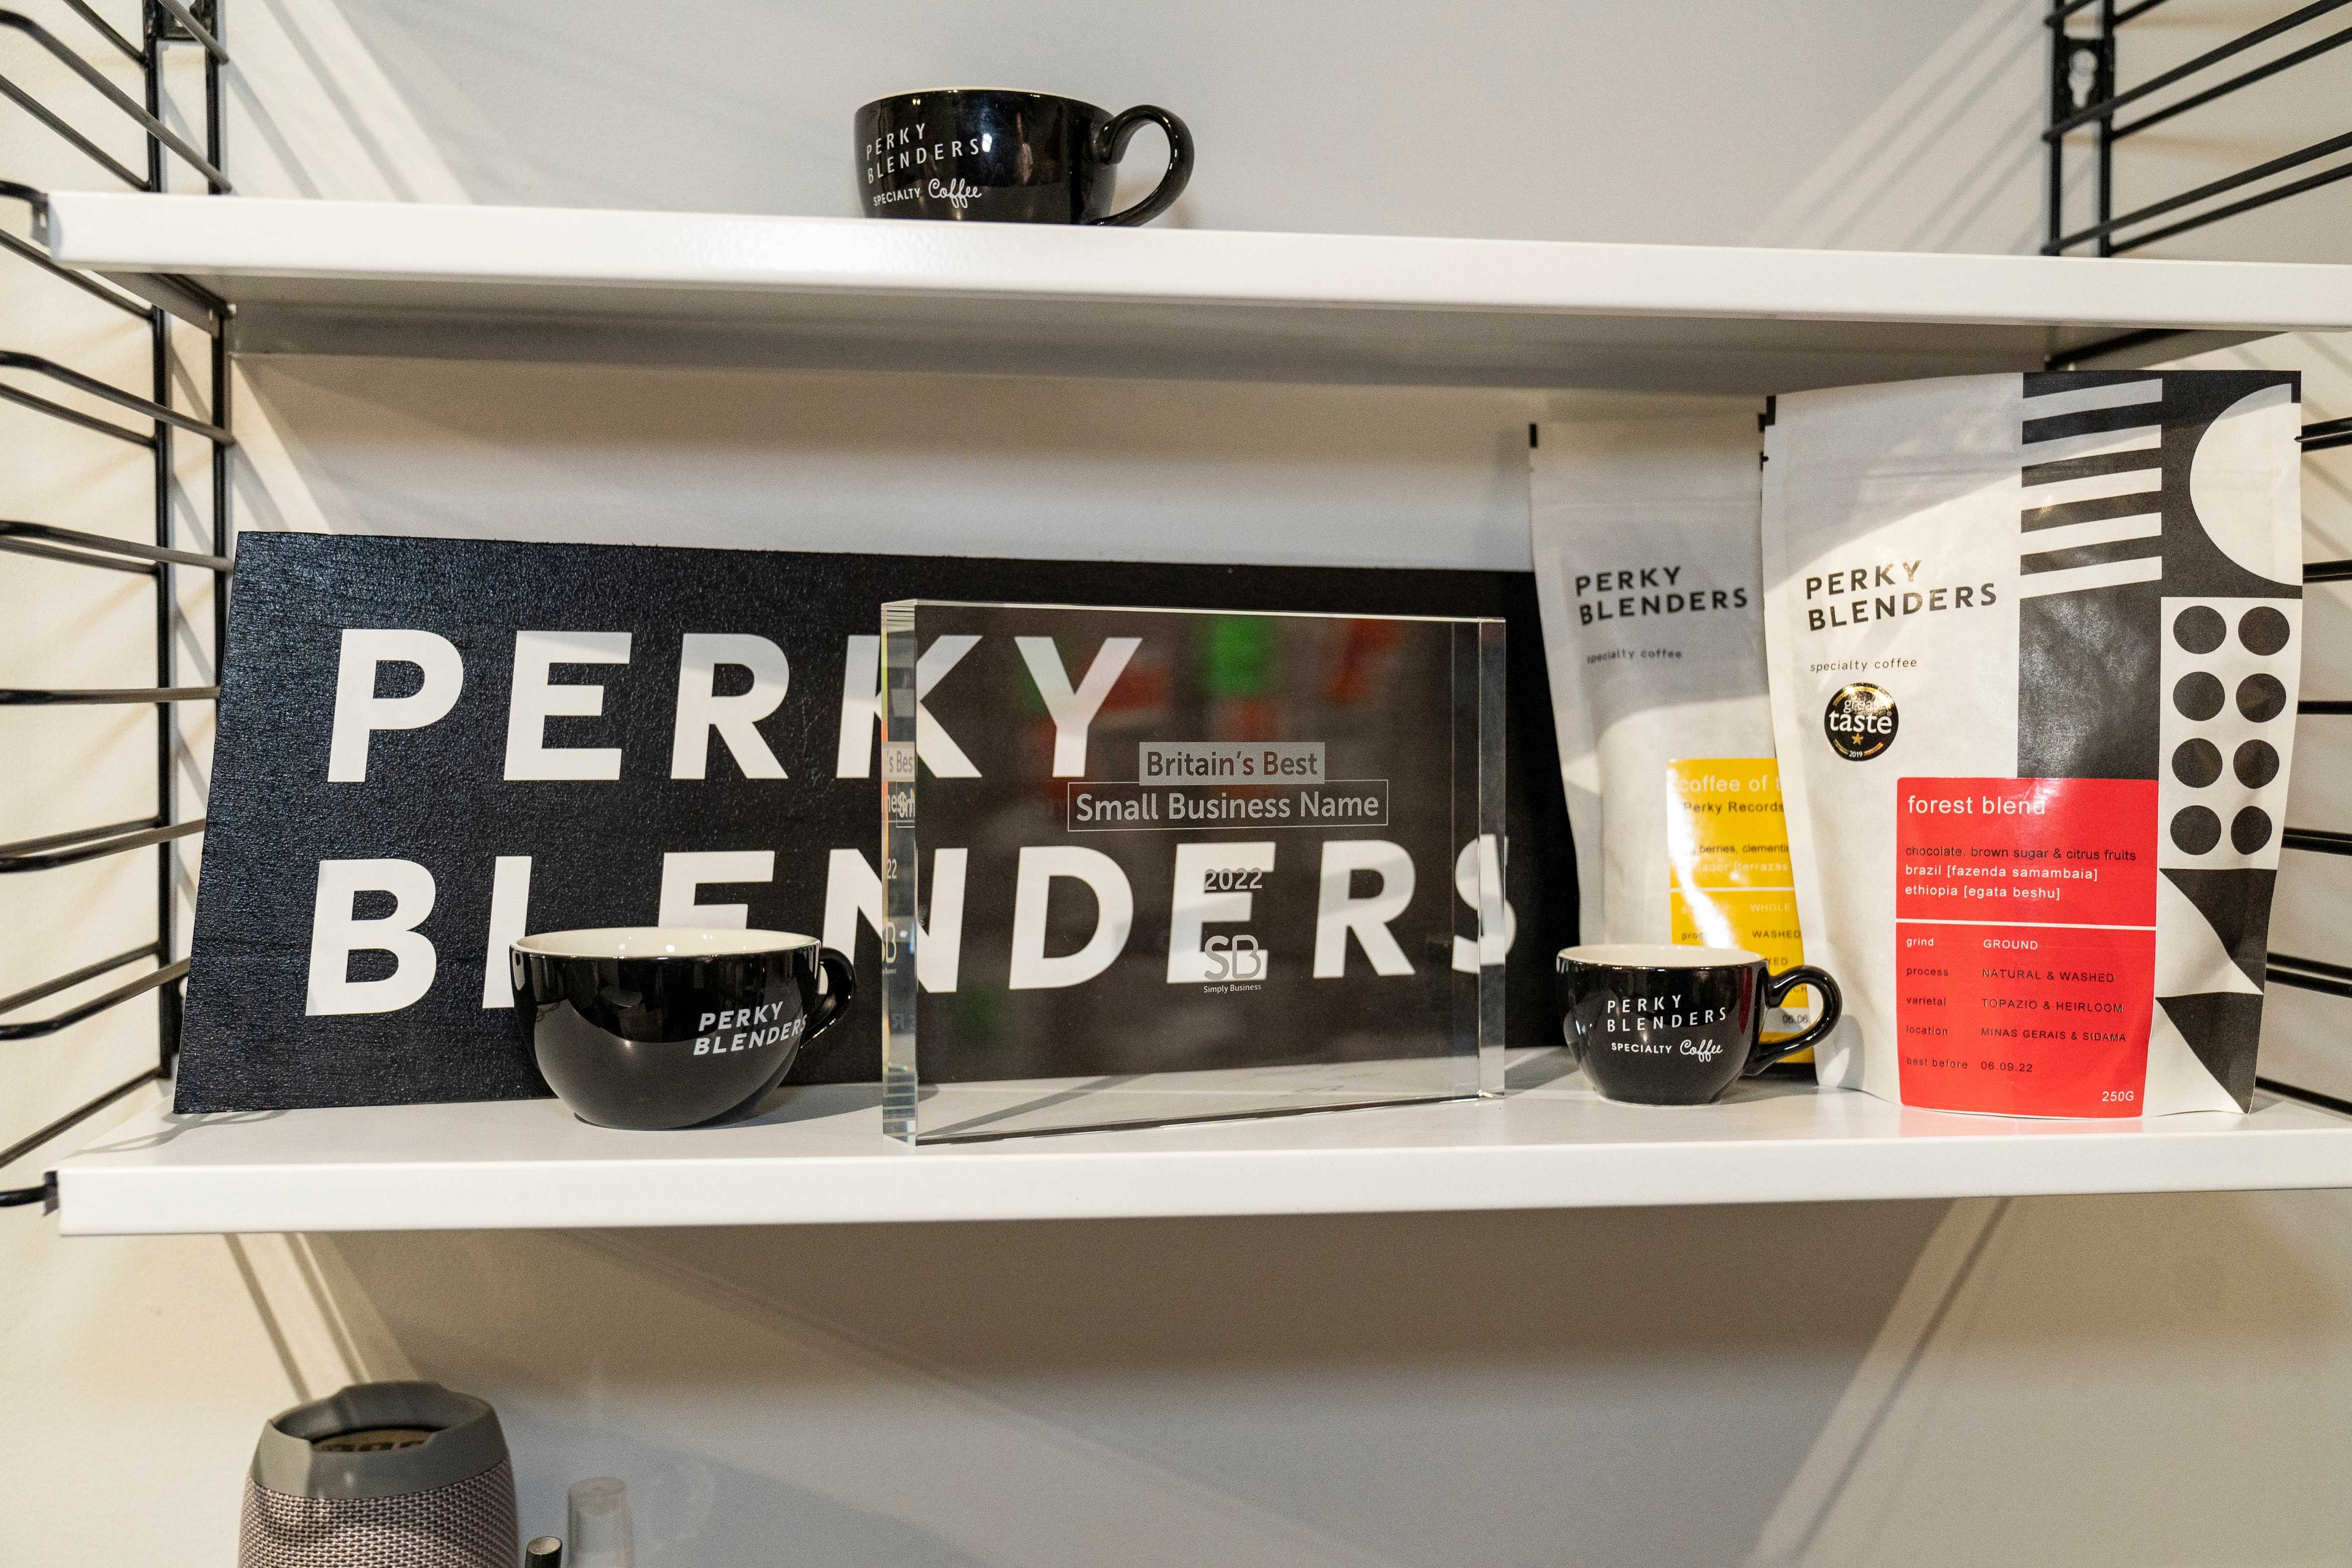 Perky Blenders Best Small Business Name award